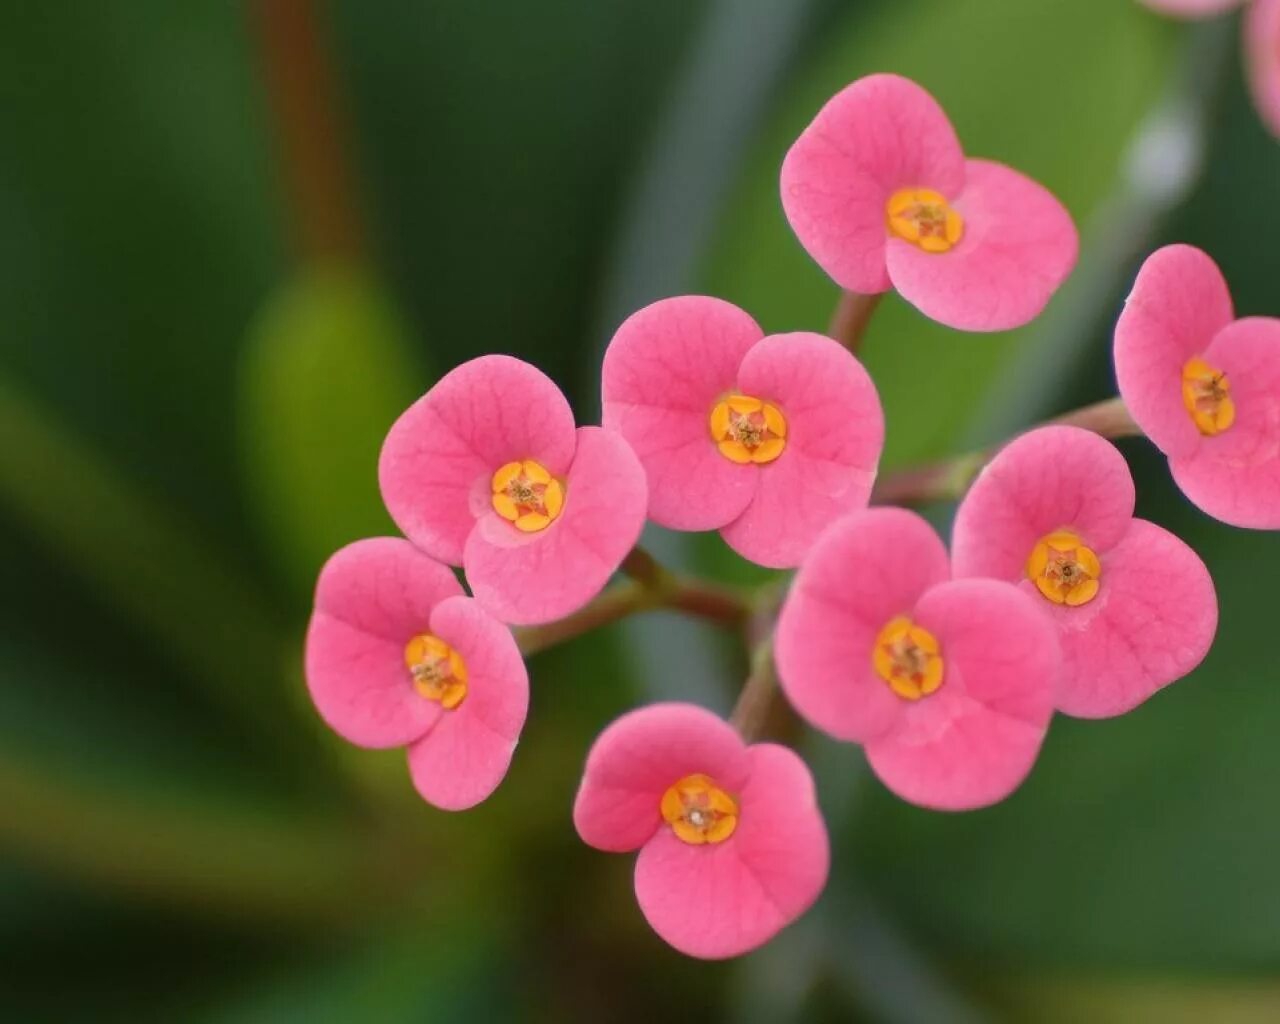 Small цветы. 20 Цветы. Flowers small image. Small Flower Plot.